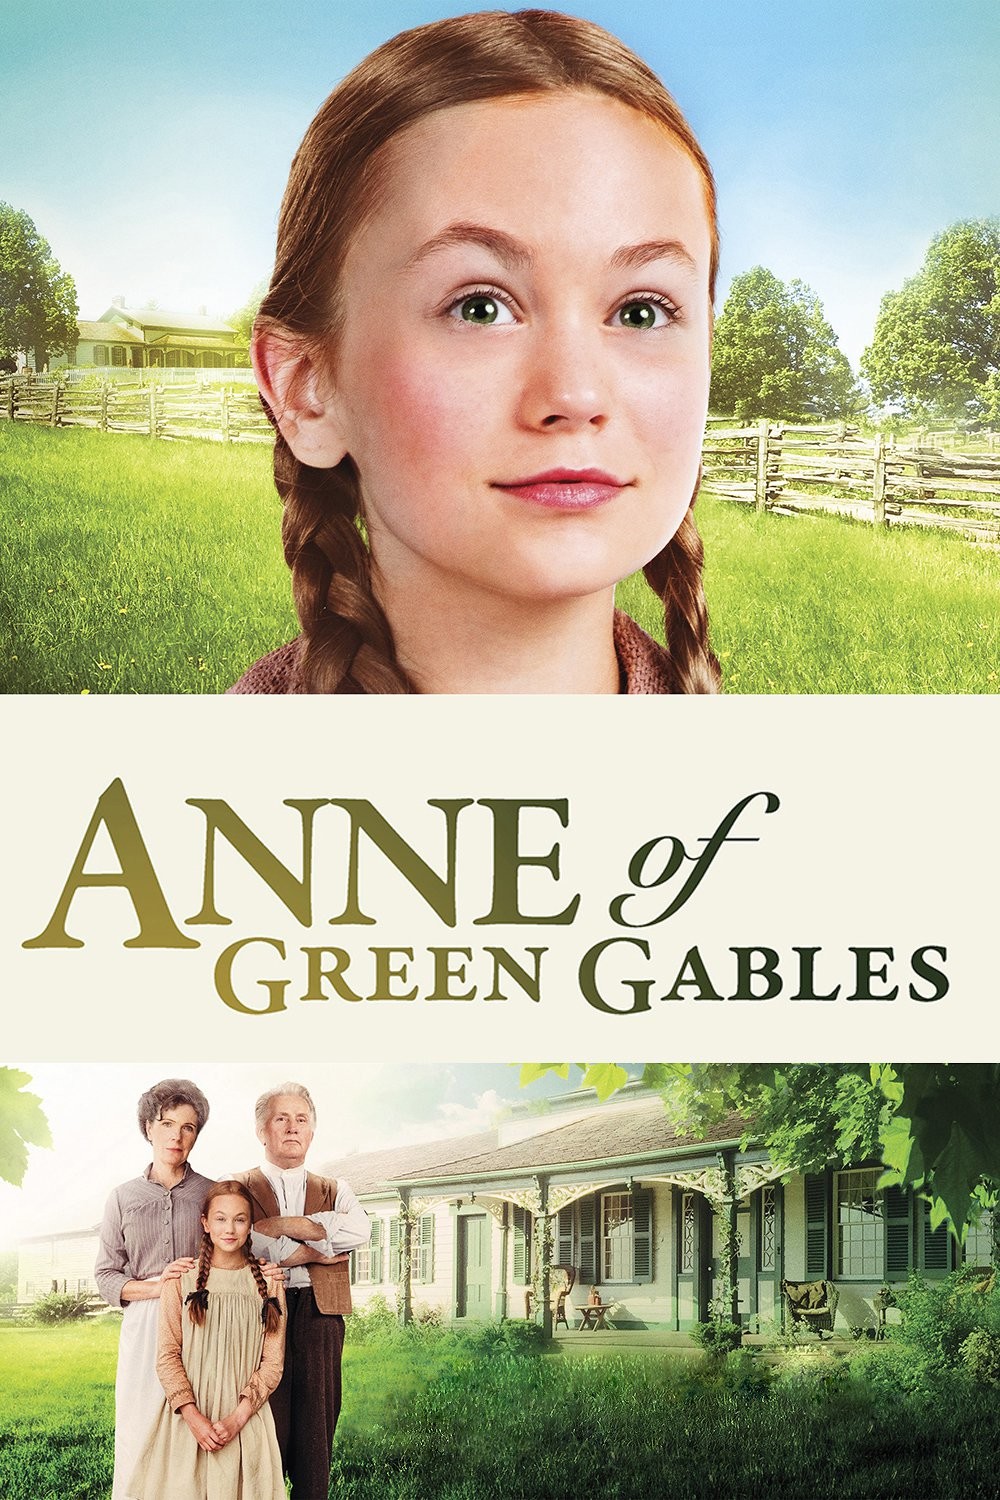 Anne of green gables original movie